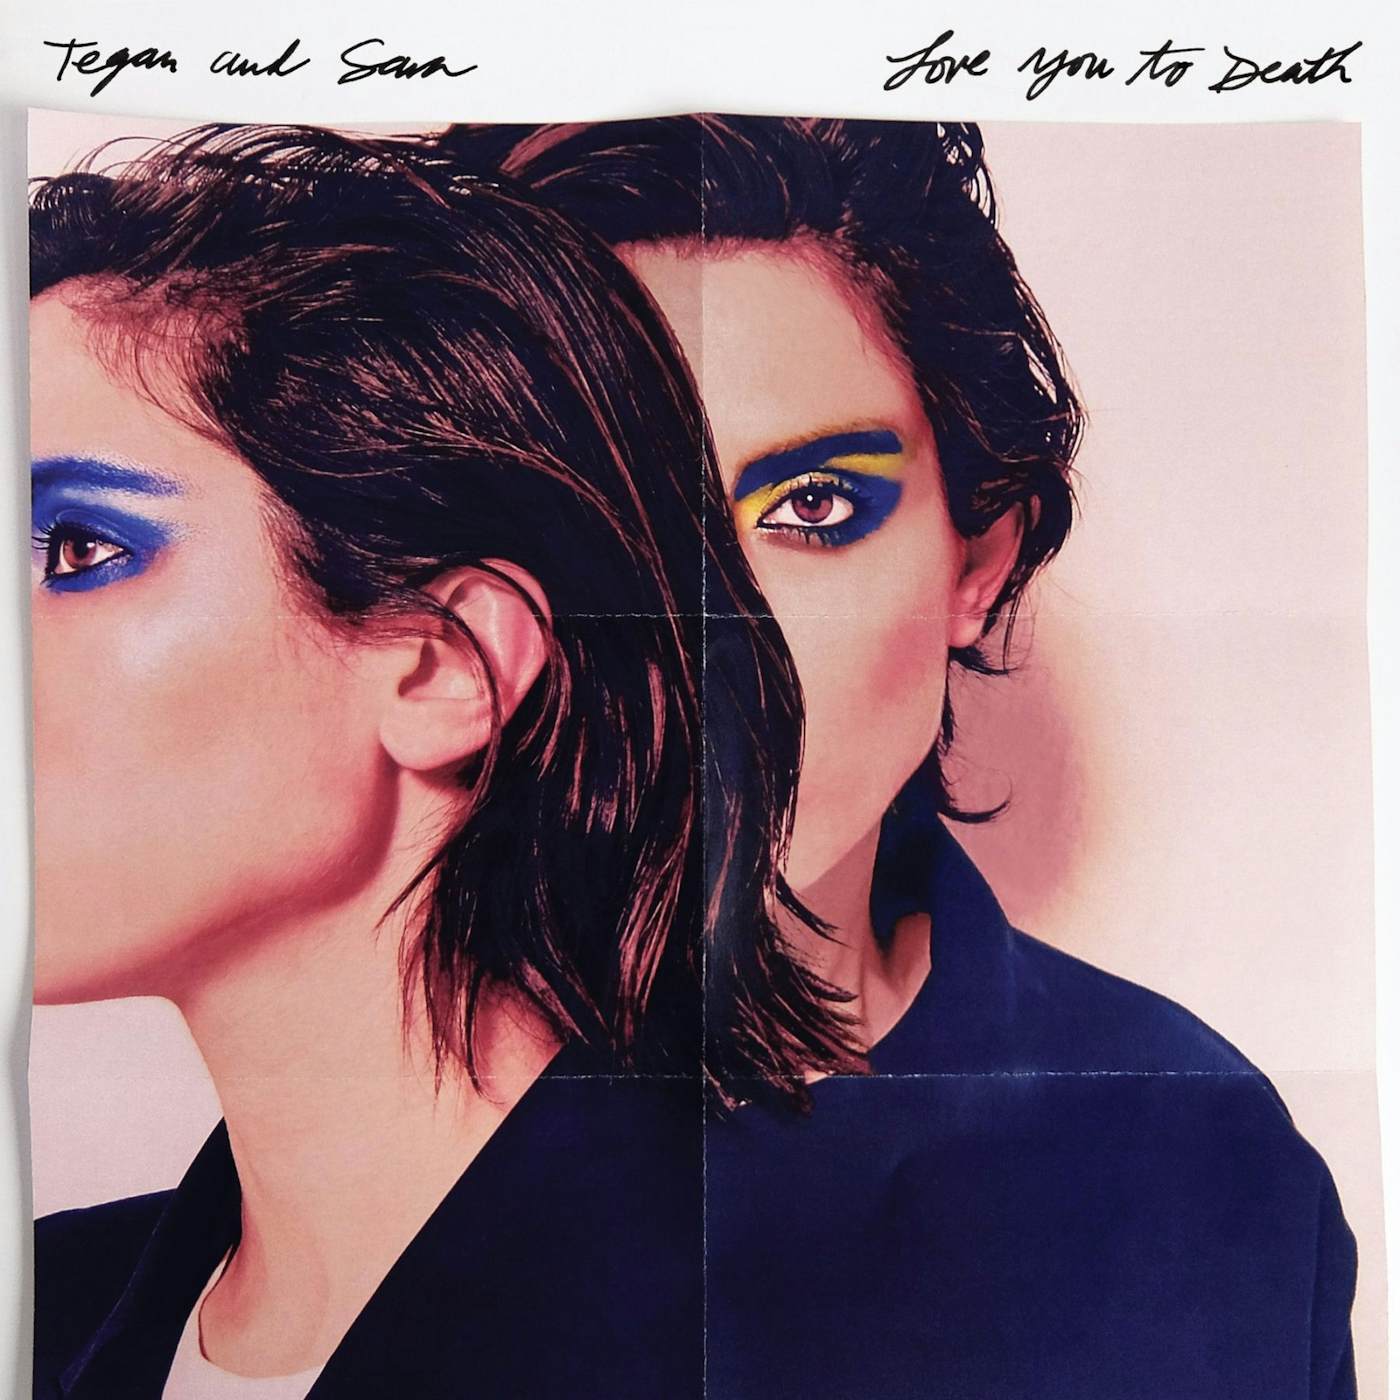 Tegan and Sara Love You to Death Vinyl Record